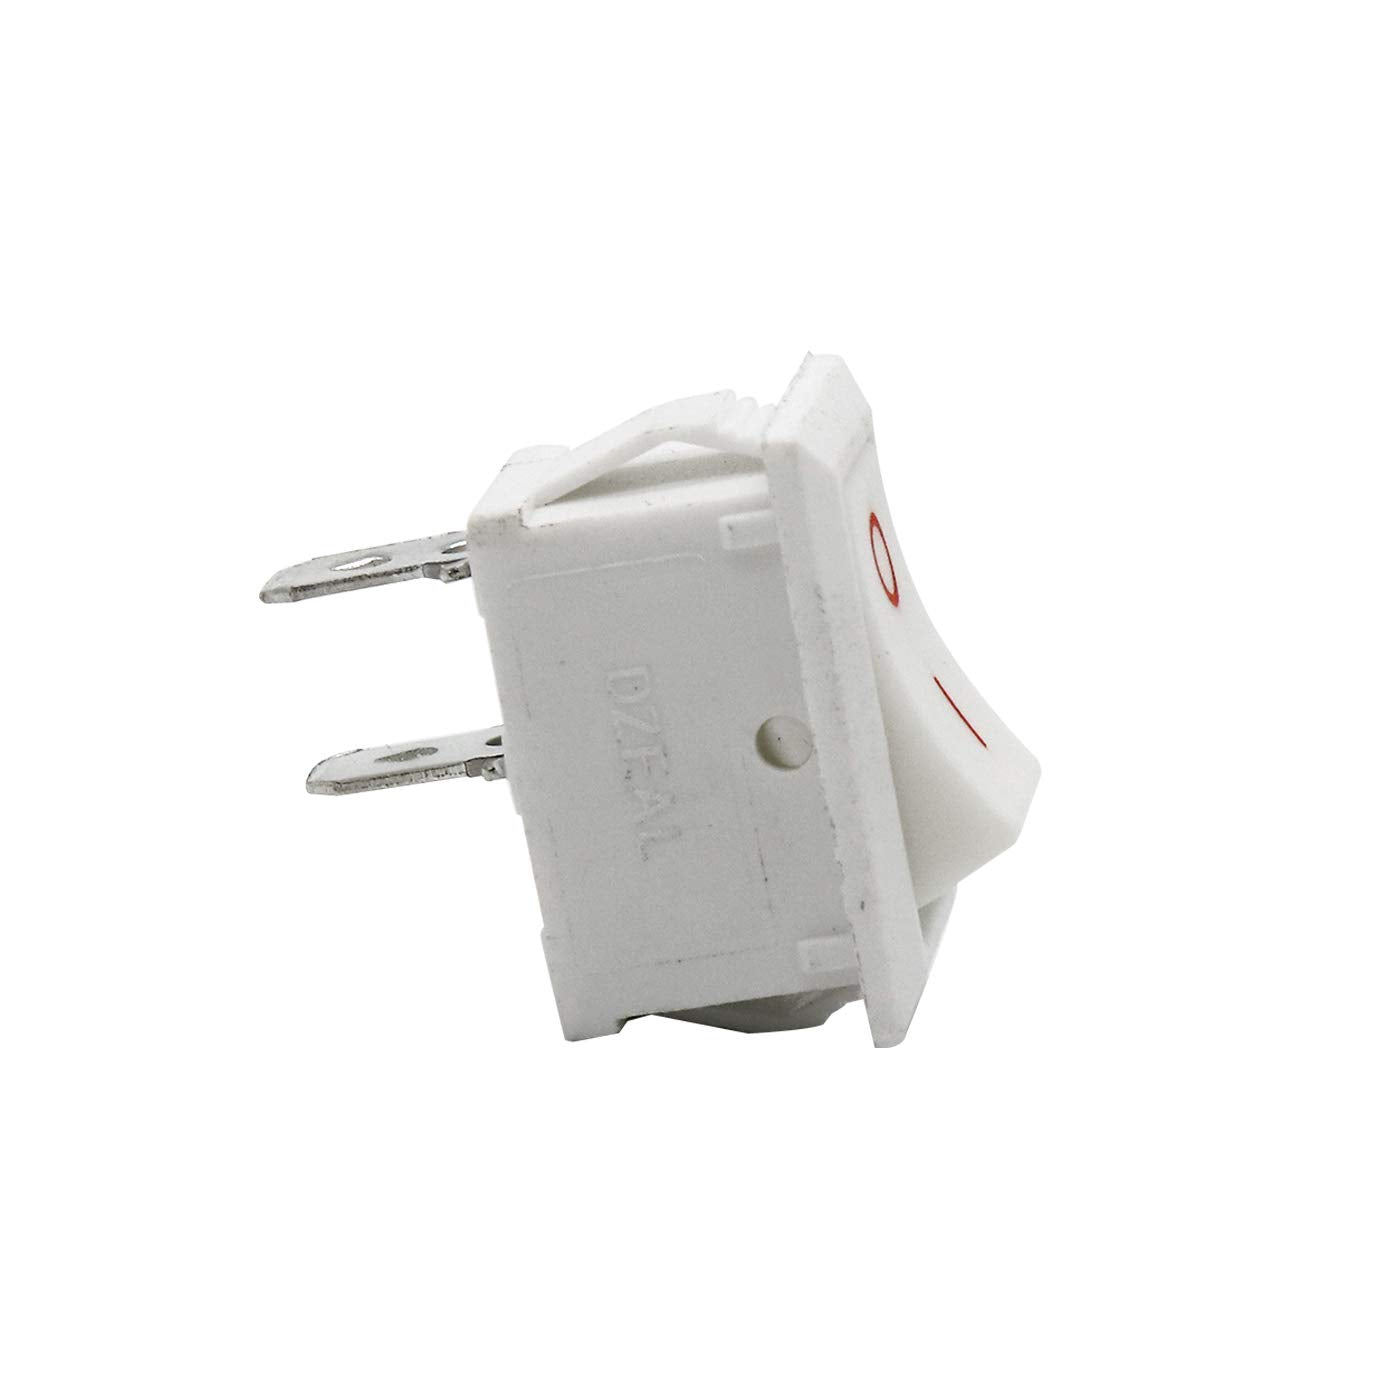 Mini Rocker Switch Complete White 2 Pin SPST ON-OFF 250V